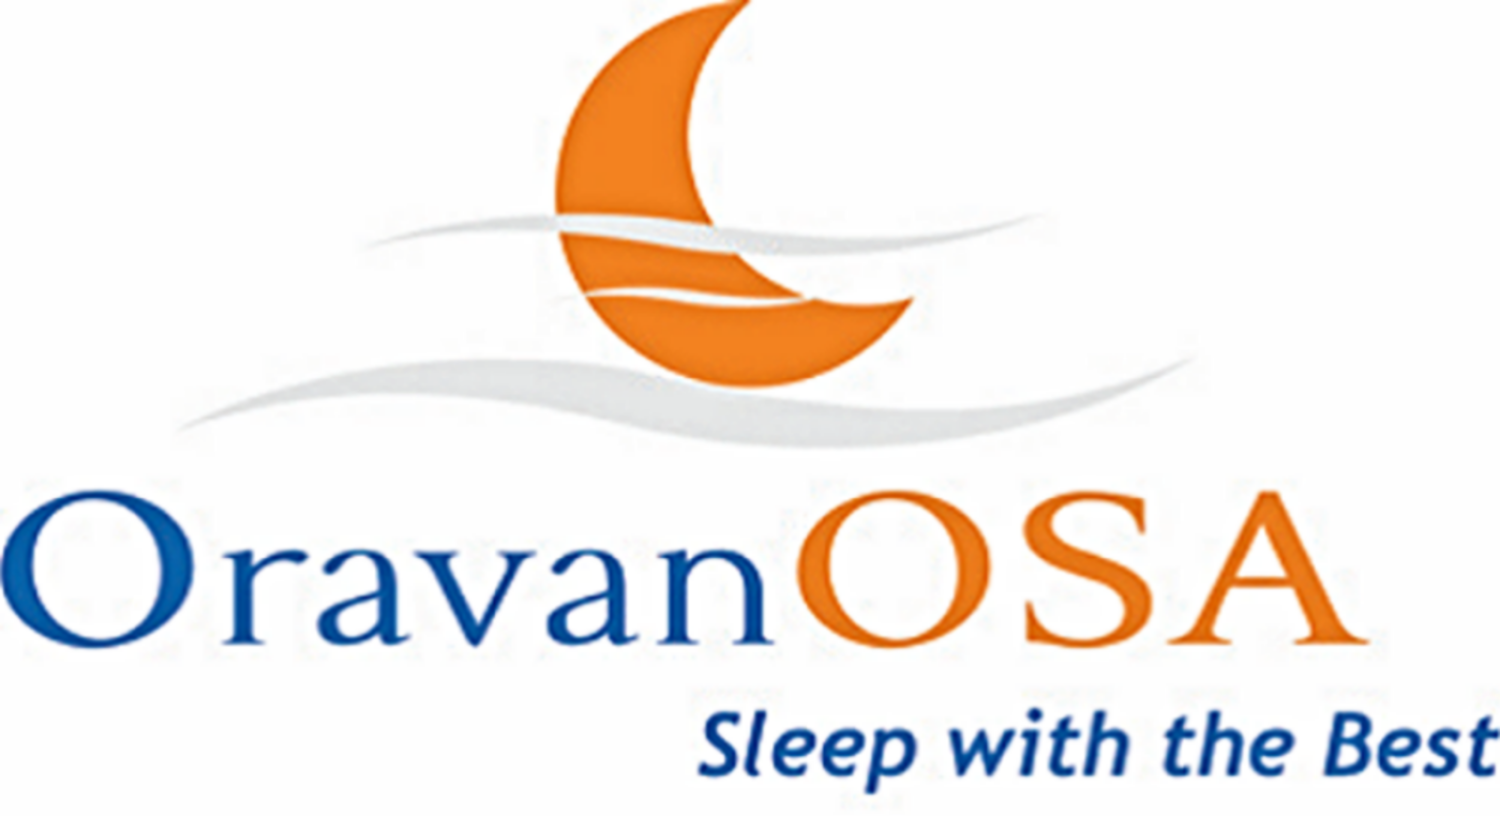 OravanOSA | Sleep with the Best